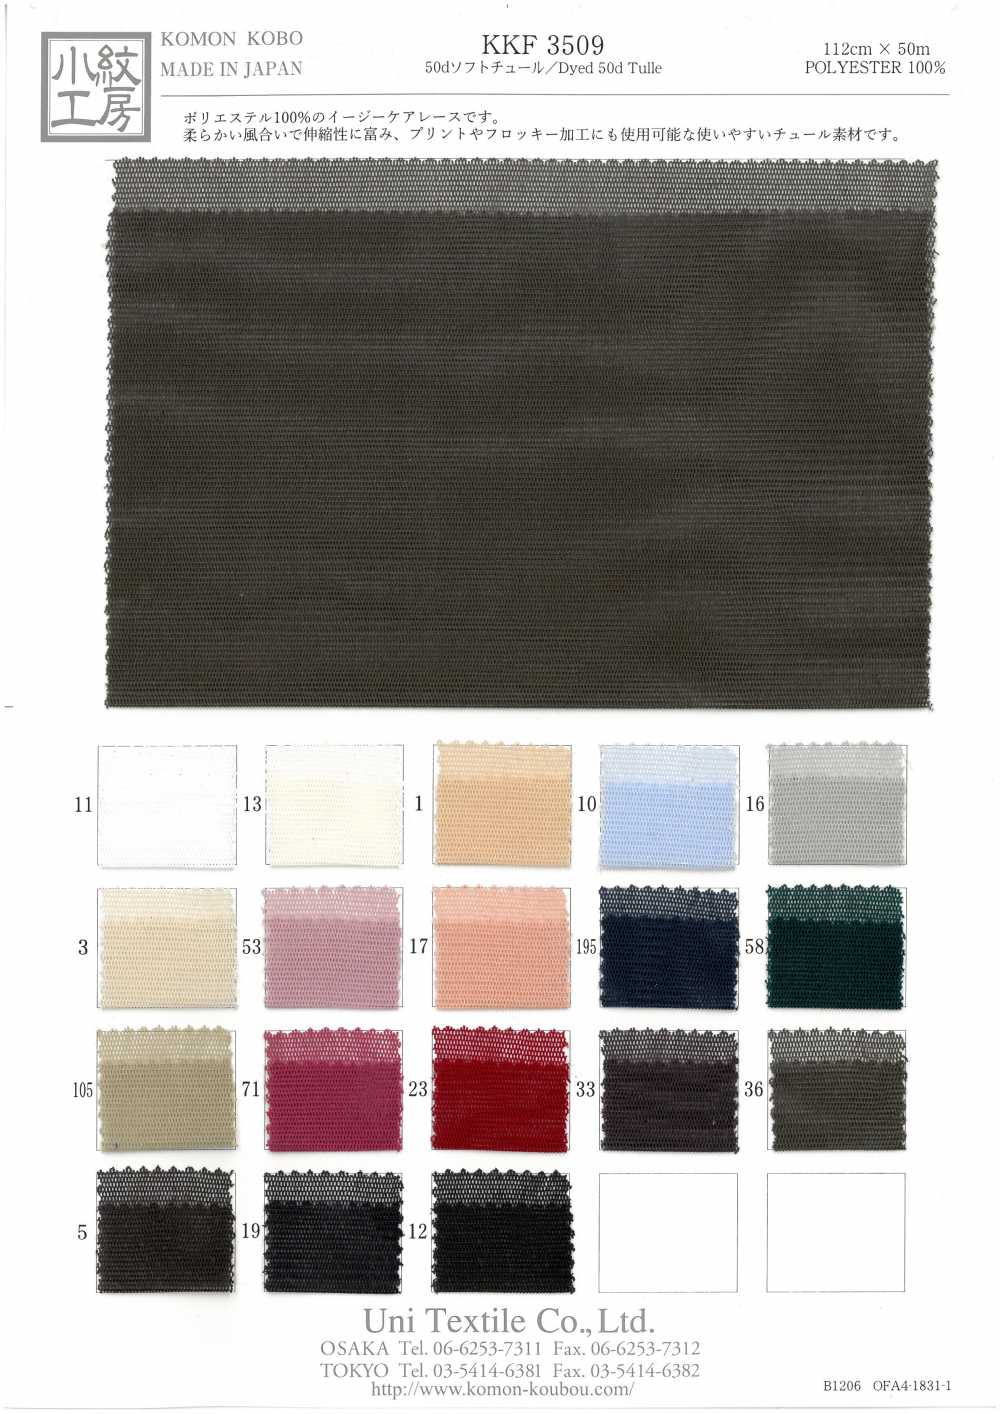 KKF3509 50d Weicher Tüll[Textilgewebe] Uni Textile